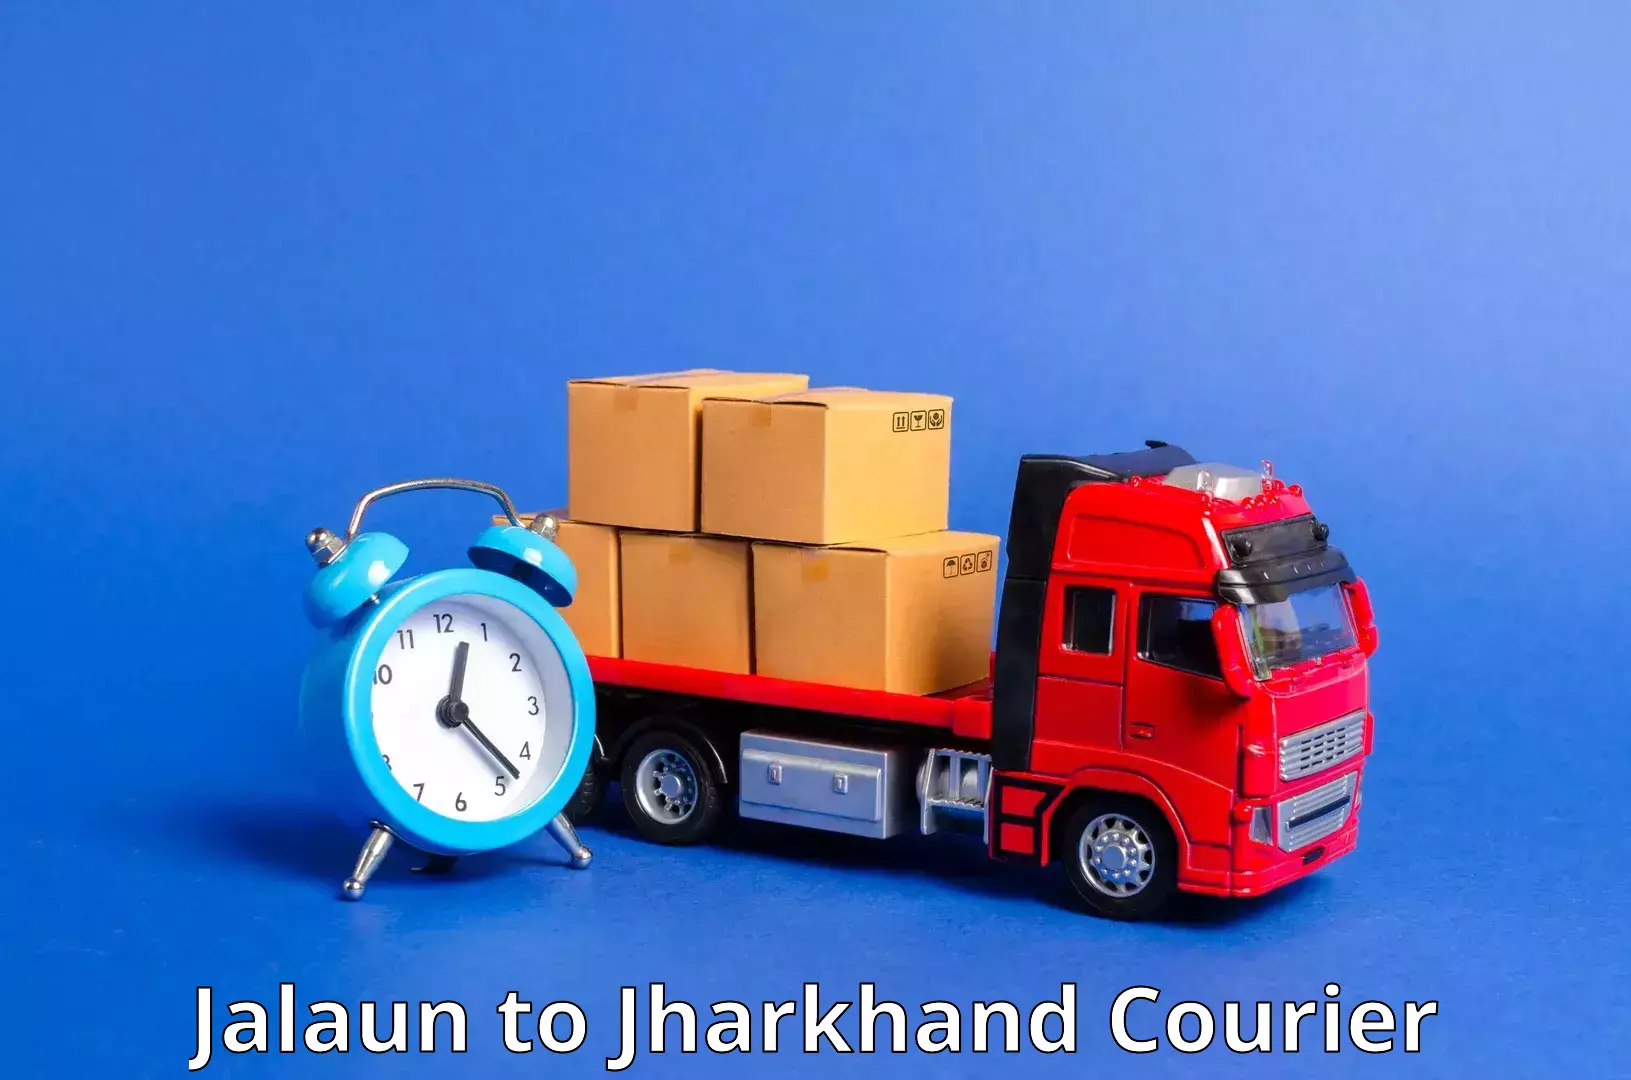 Express delivery network Jalaun to Jamshedpur